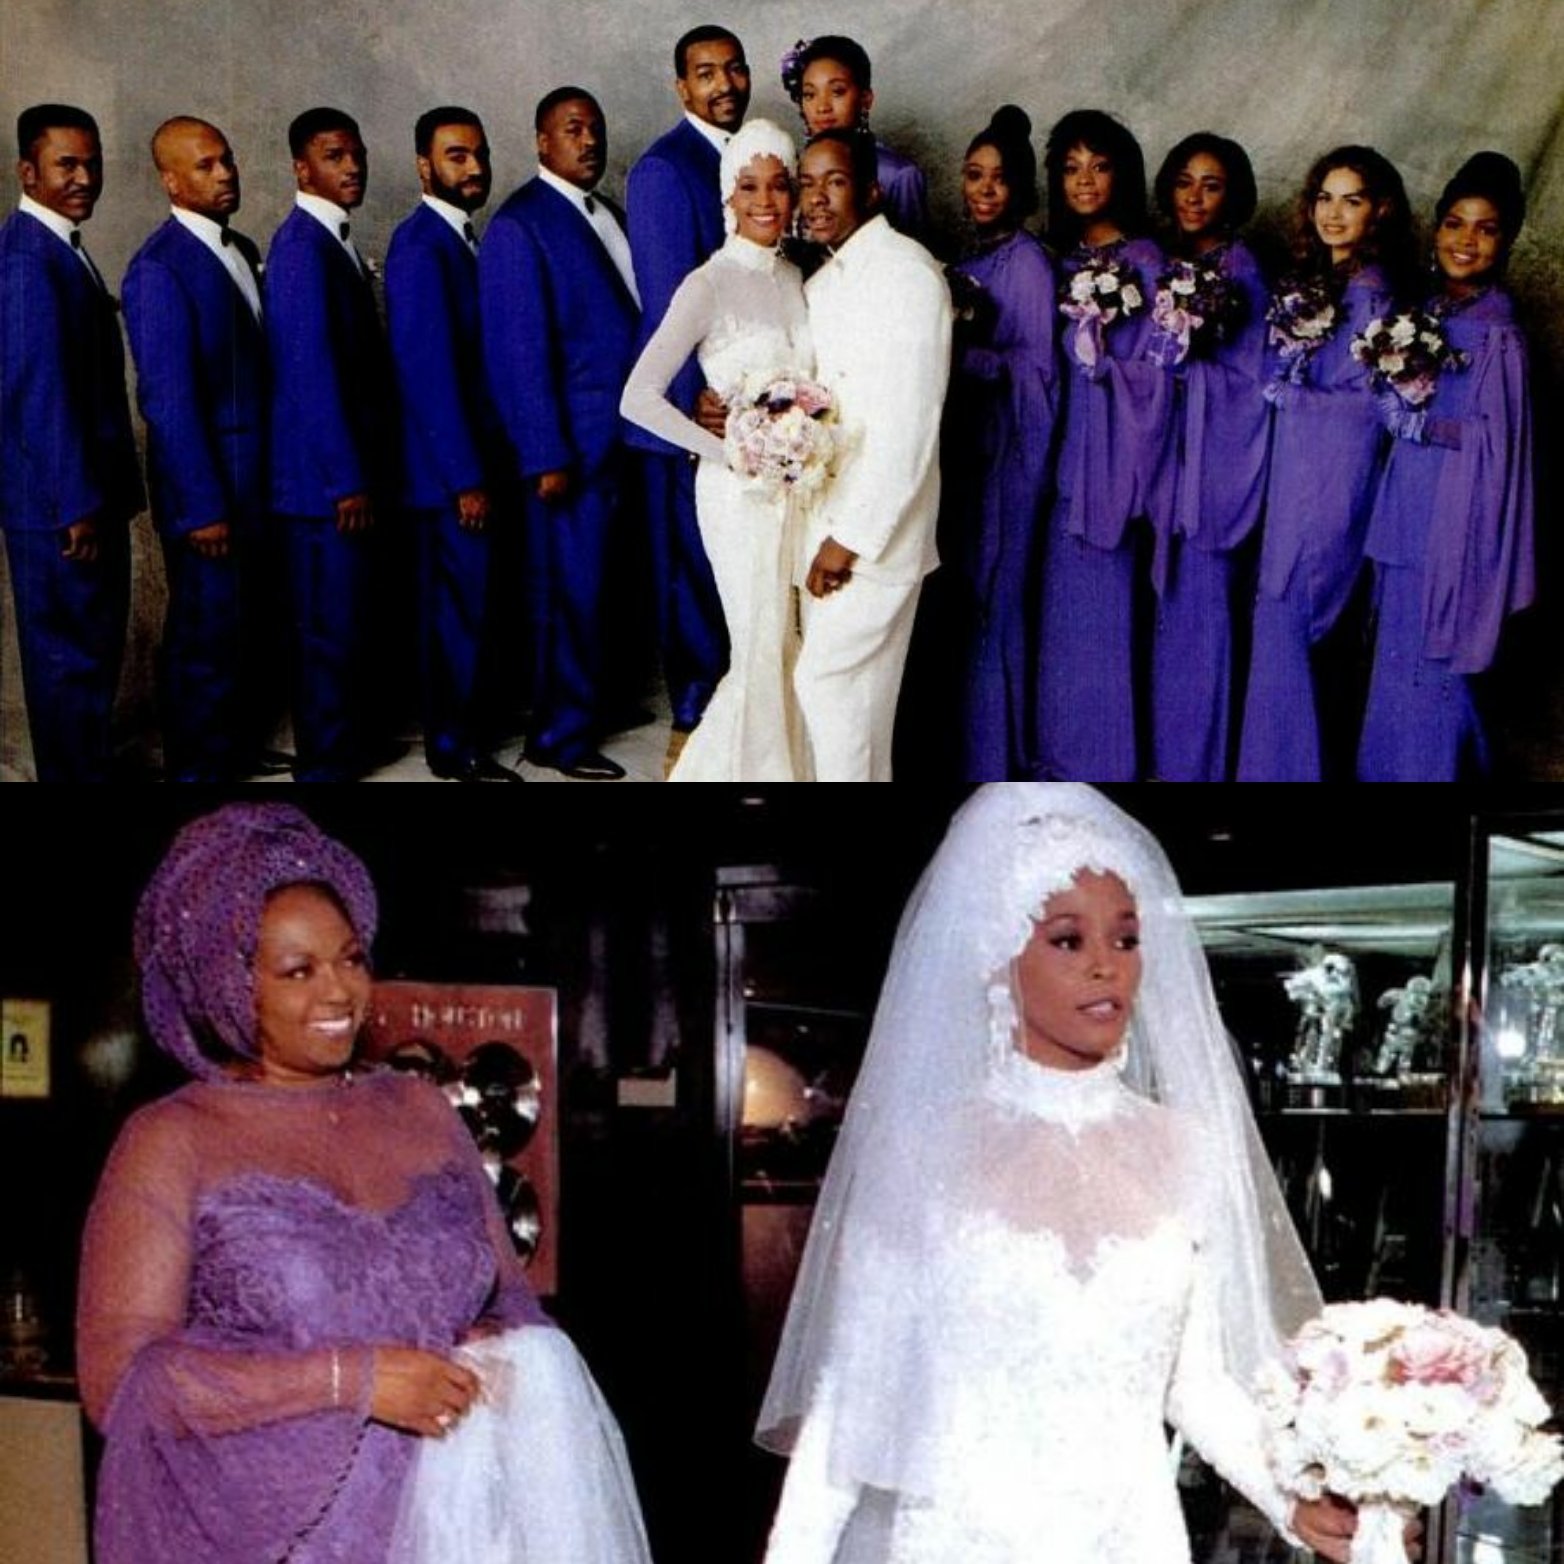 Whitney's Nippians on X: "On this day, July 18, 1992 Whitney Houston married @KingBobbyBrown @marcbouwer designed her Wedding dress. #Whitney #WhitneyHouston #WhitneysNippians #ILoveYouWhitney #BobbyBrown #MarcBouwer https://t.co/q5vklqm5st" / X